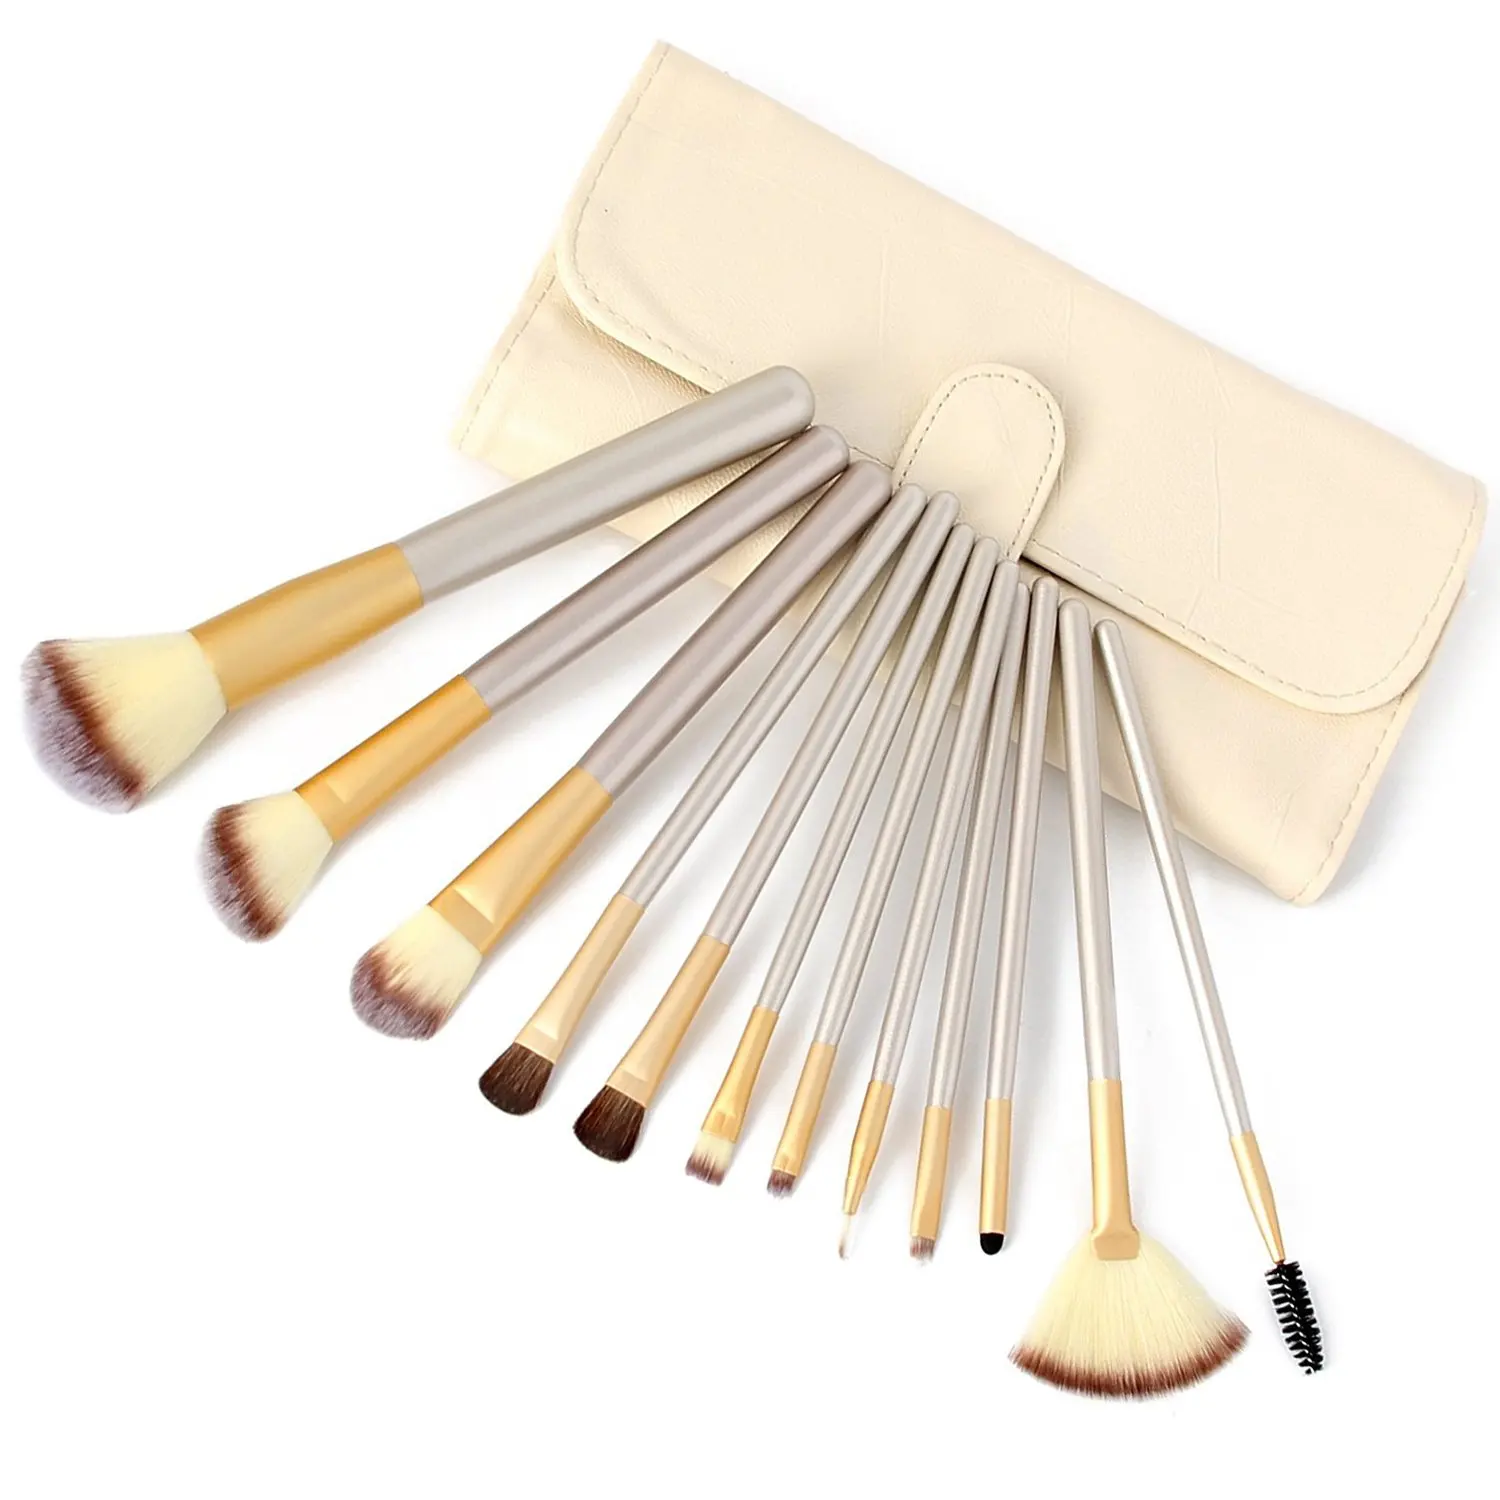 

12 Pcs Makeup Brushes Premium Synthetic Cosmetic Foundation Powder Concealers Eye Shadows Blush Brush Makeup Tool